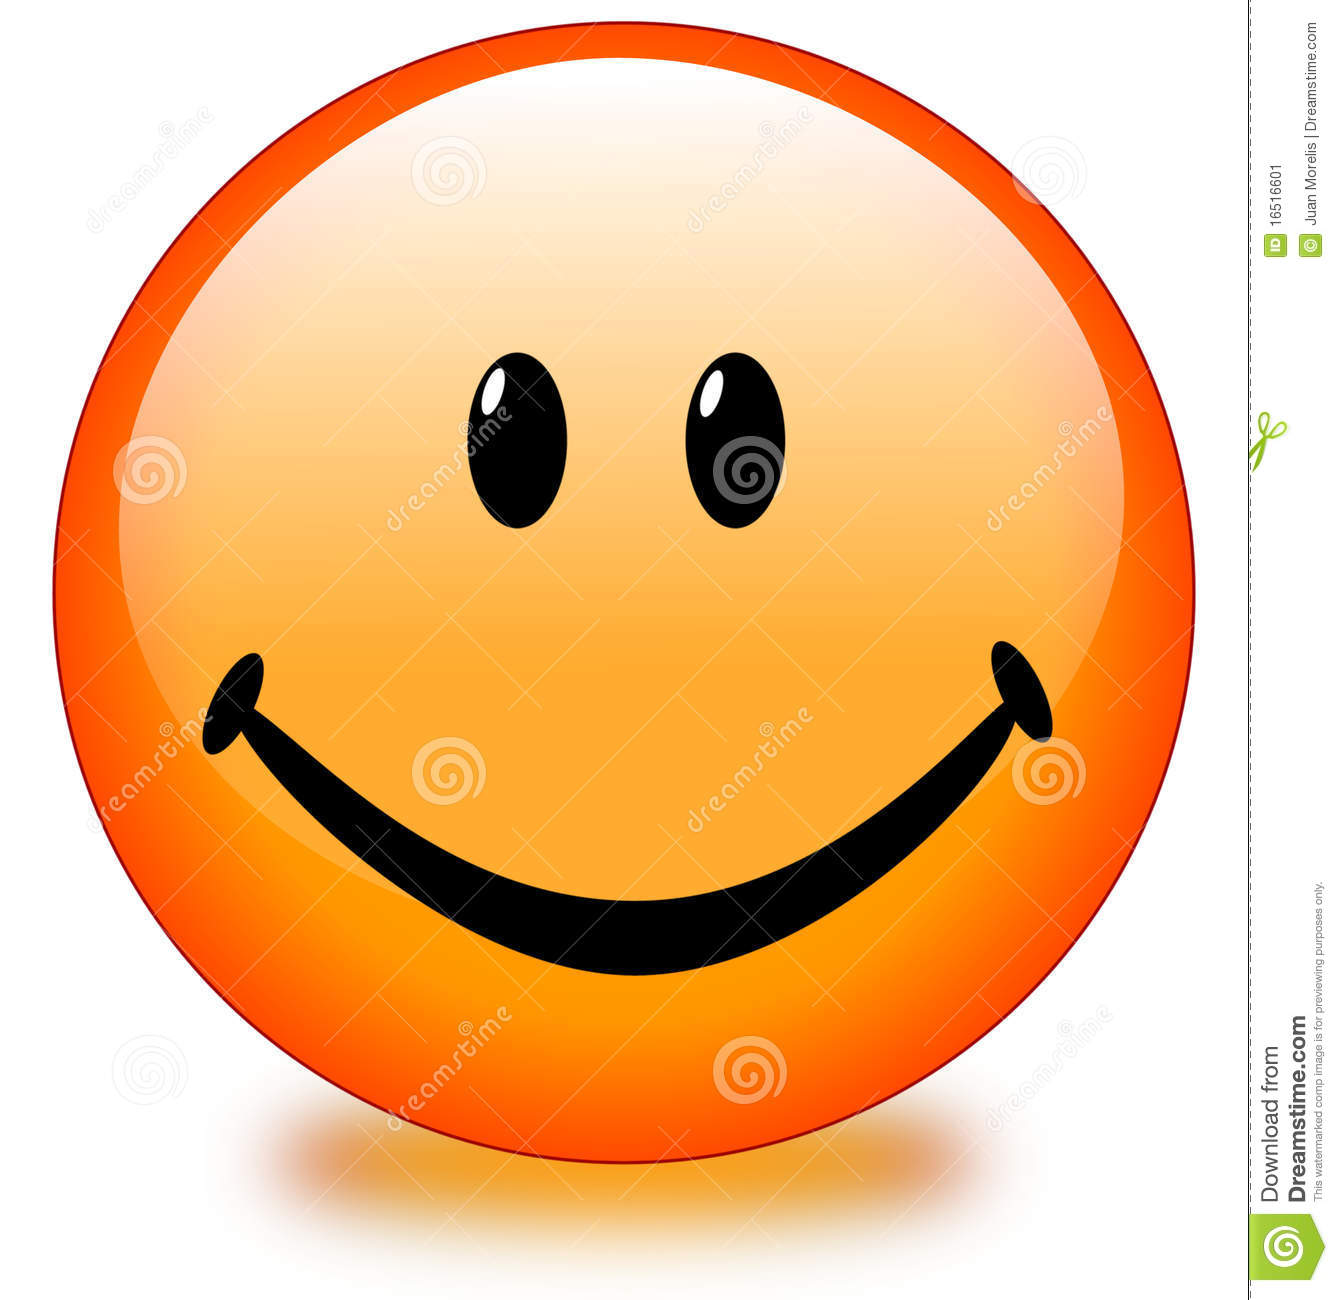 Orange Smiley Face Button Stock Image   Image  16516601